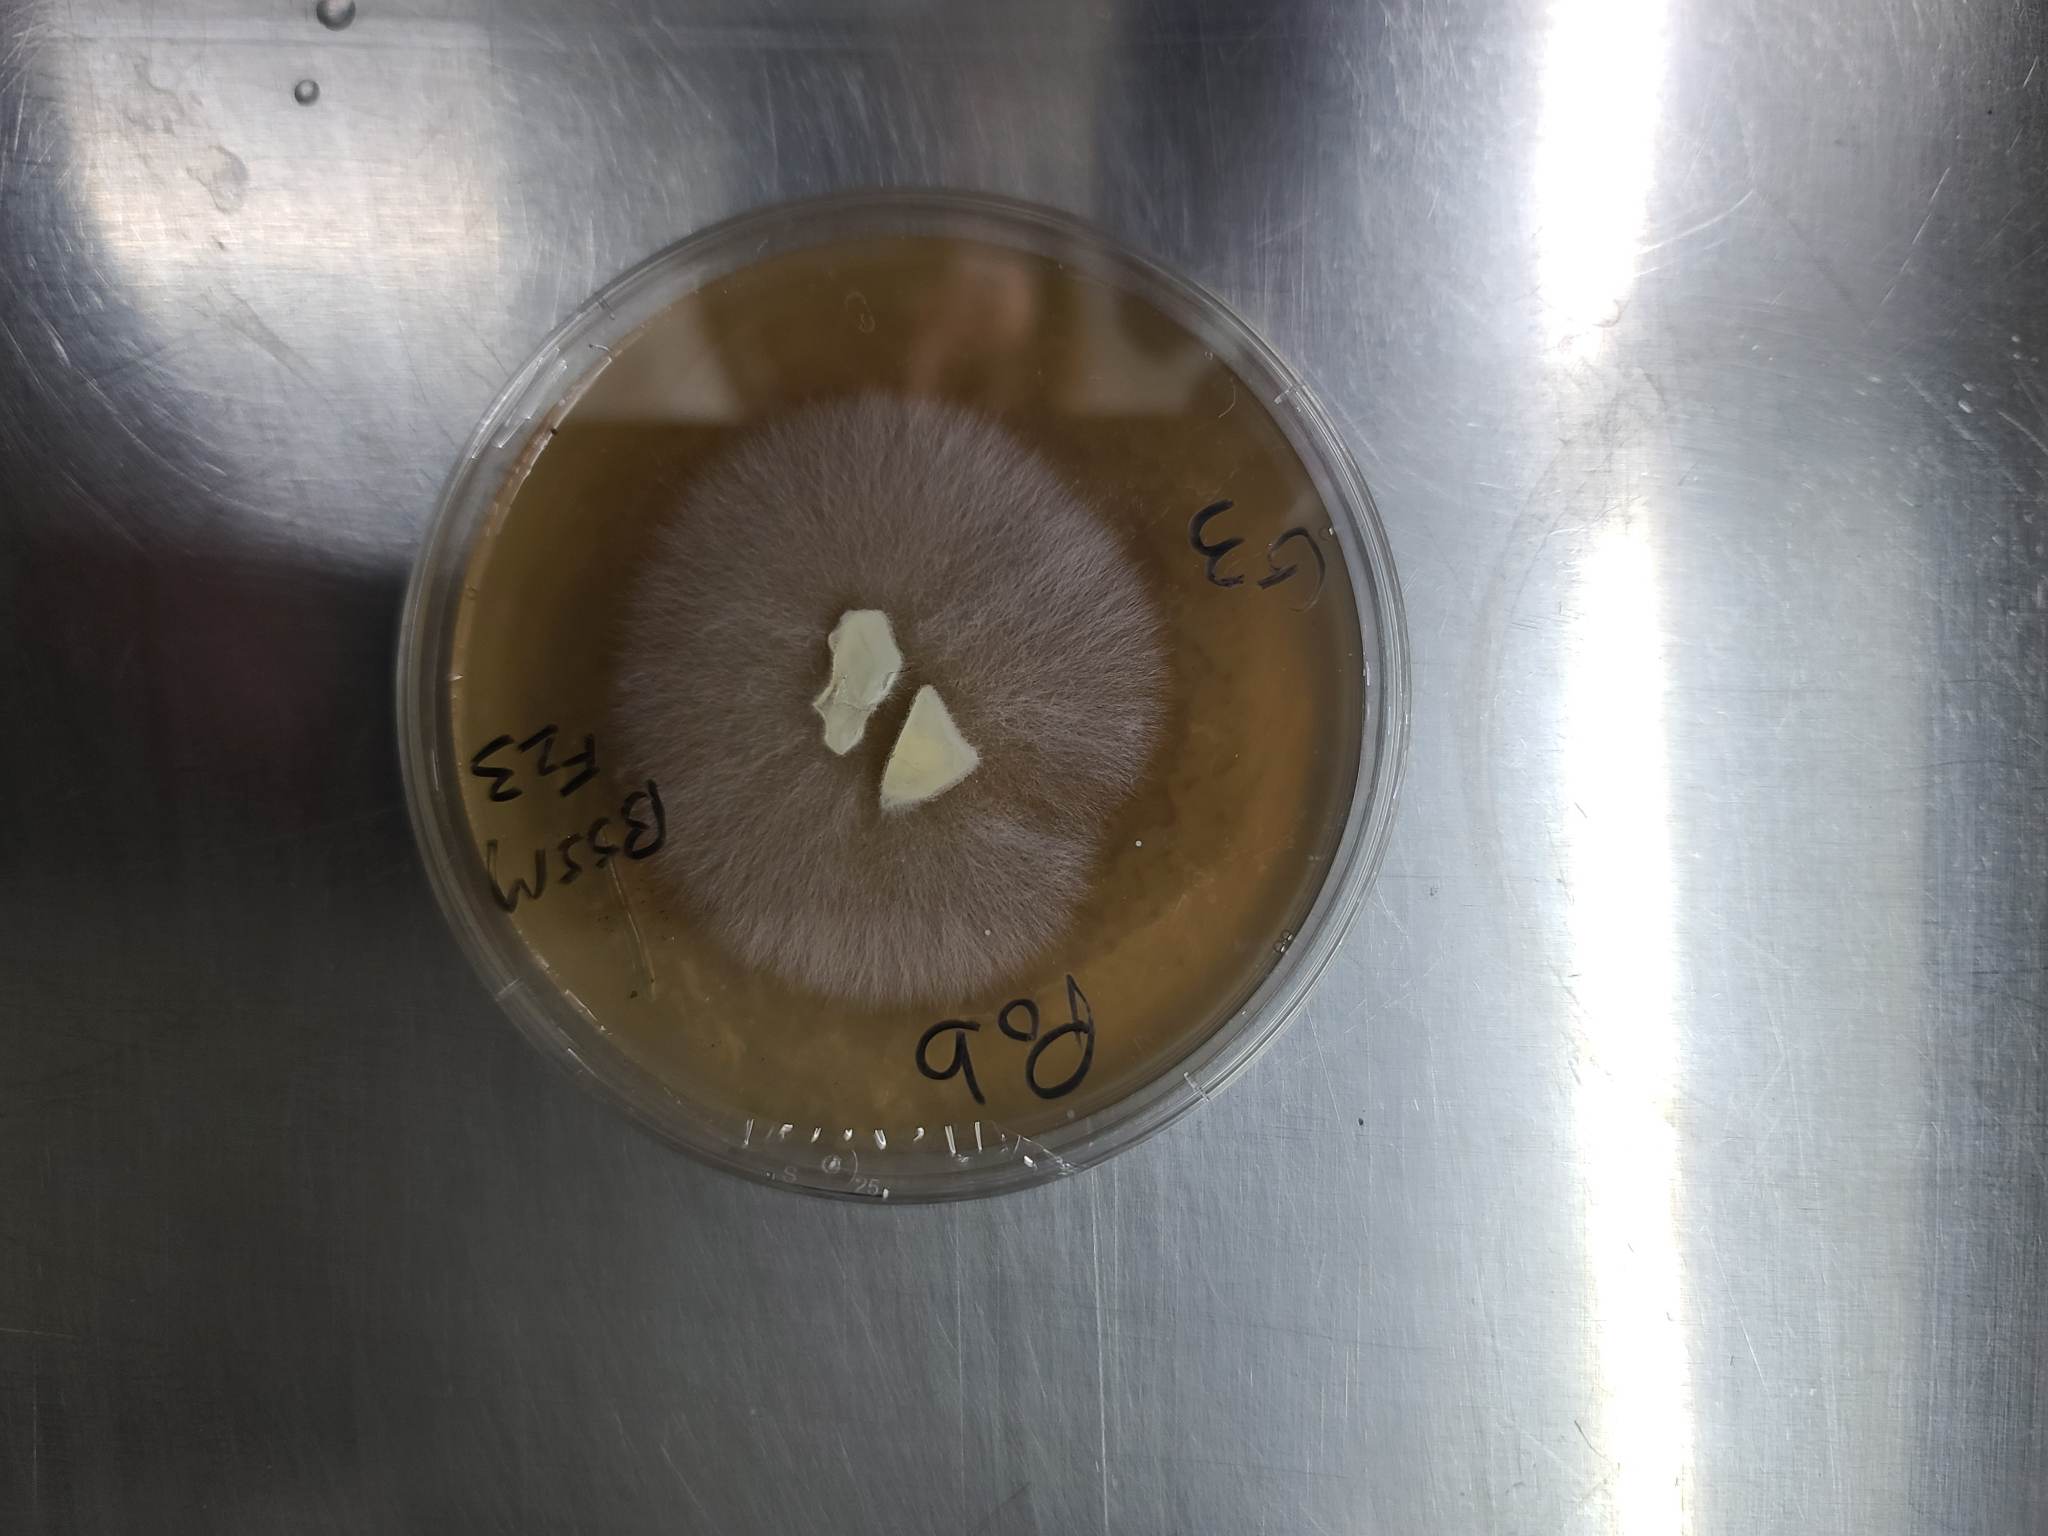 Petri plate cultures